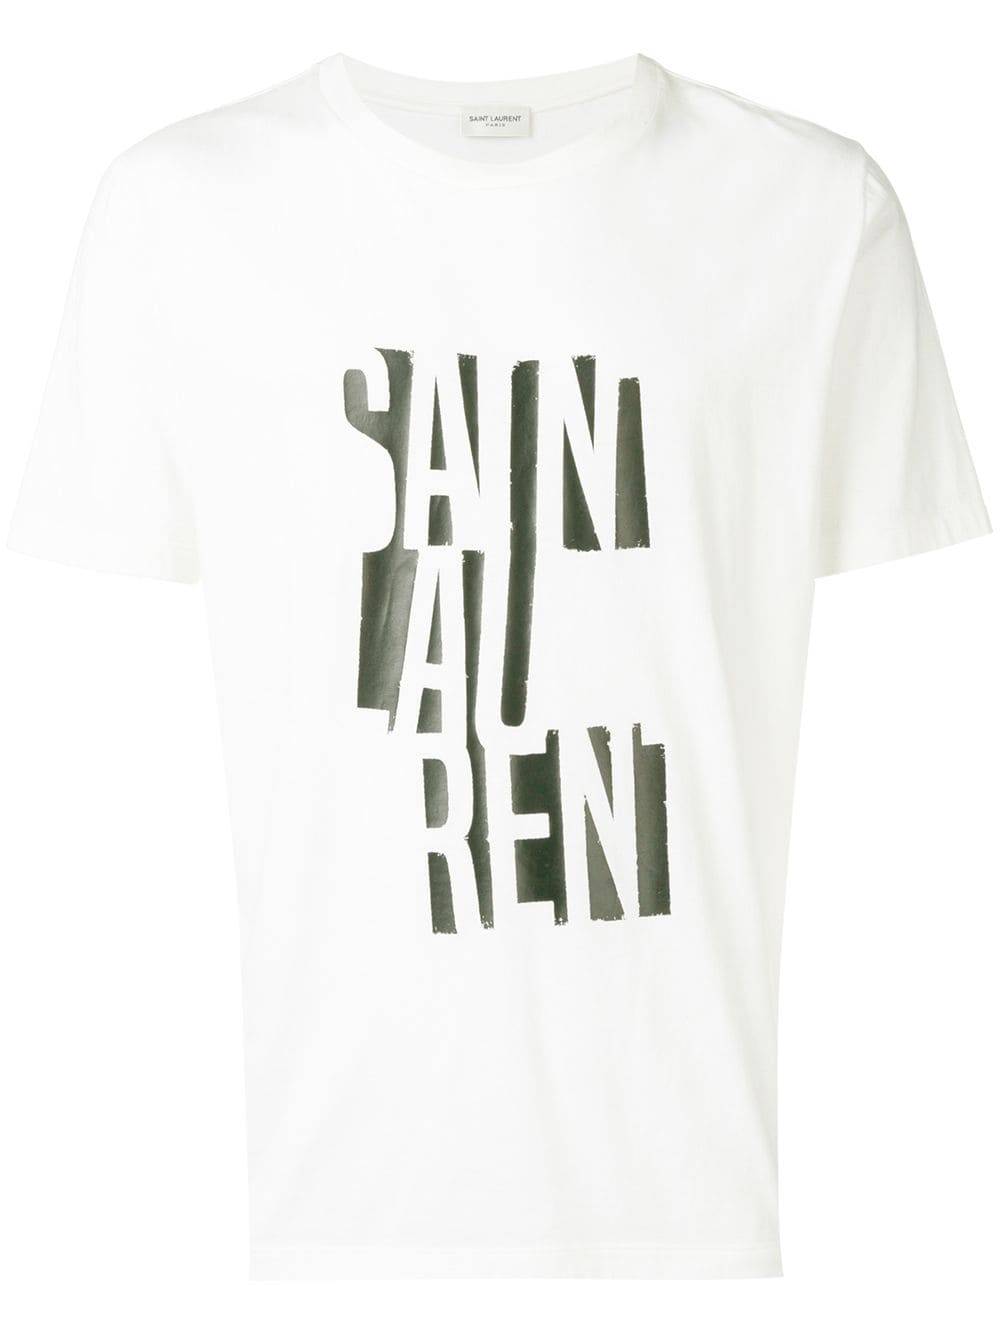 Deconstructed Logo - Saint Laurent Deconstructed Logo T Shirt